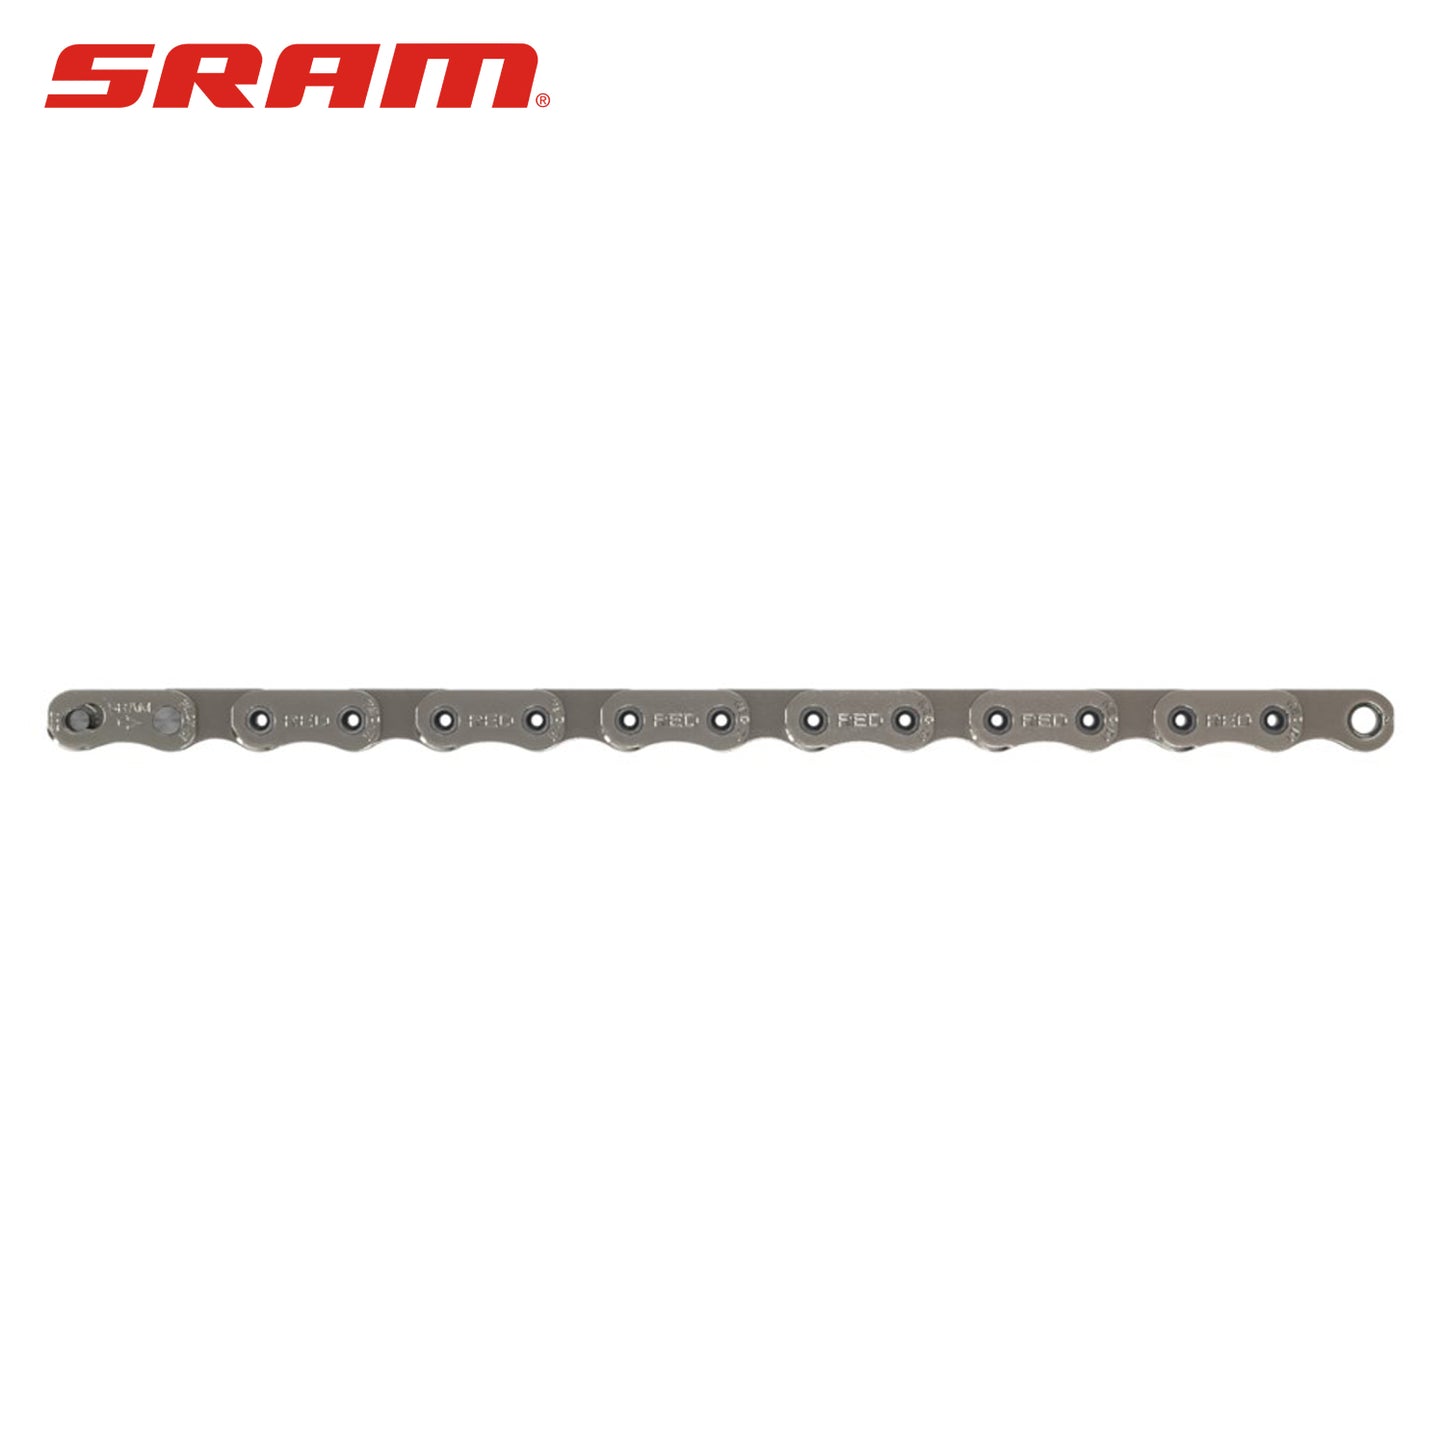 SRAM RED CN-RED-D1 AXS 12-Speed Flattop Bike Chain 114 Links